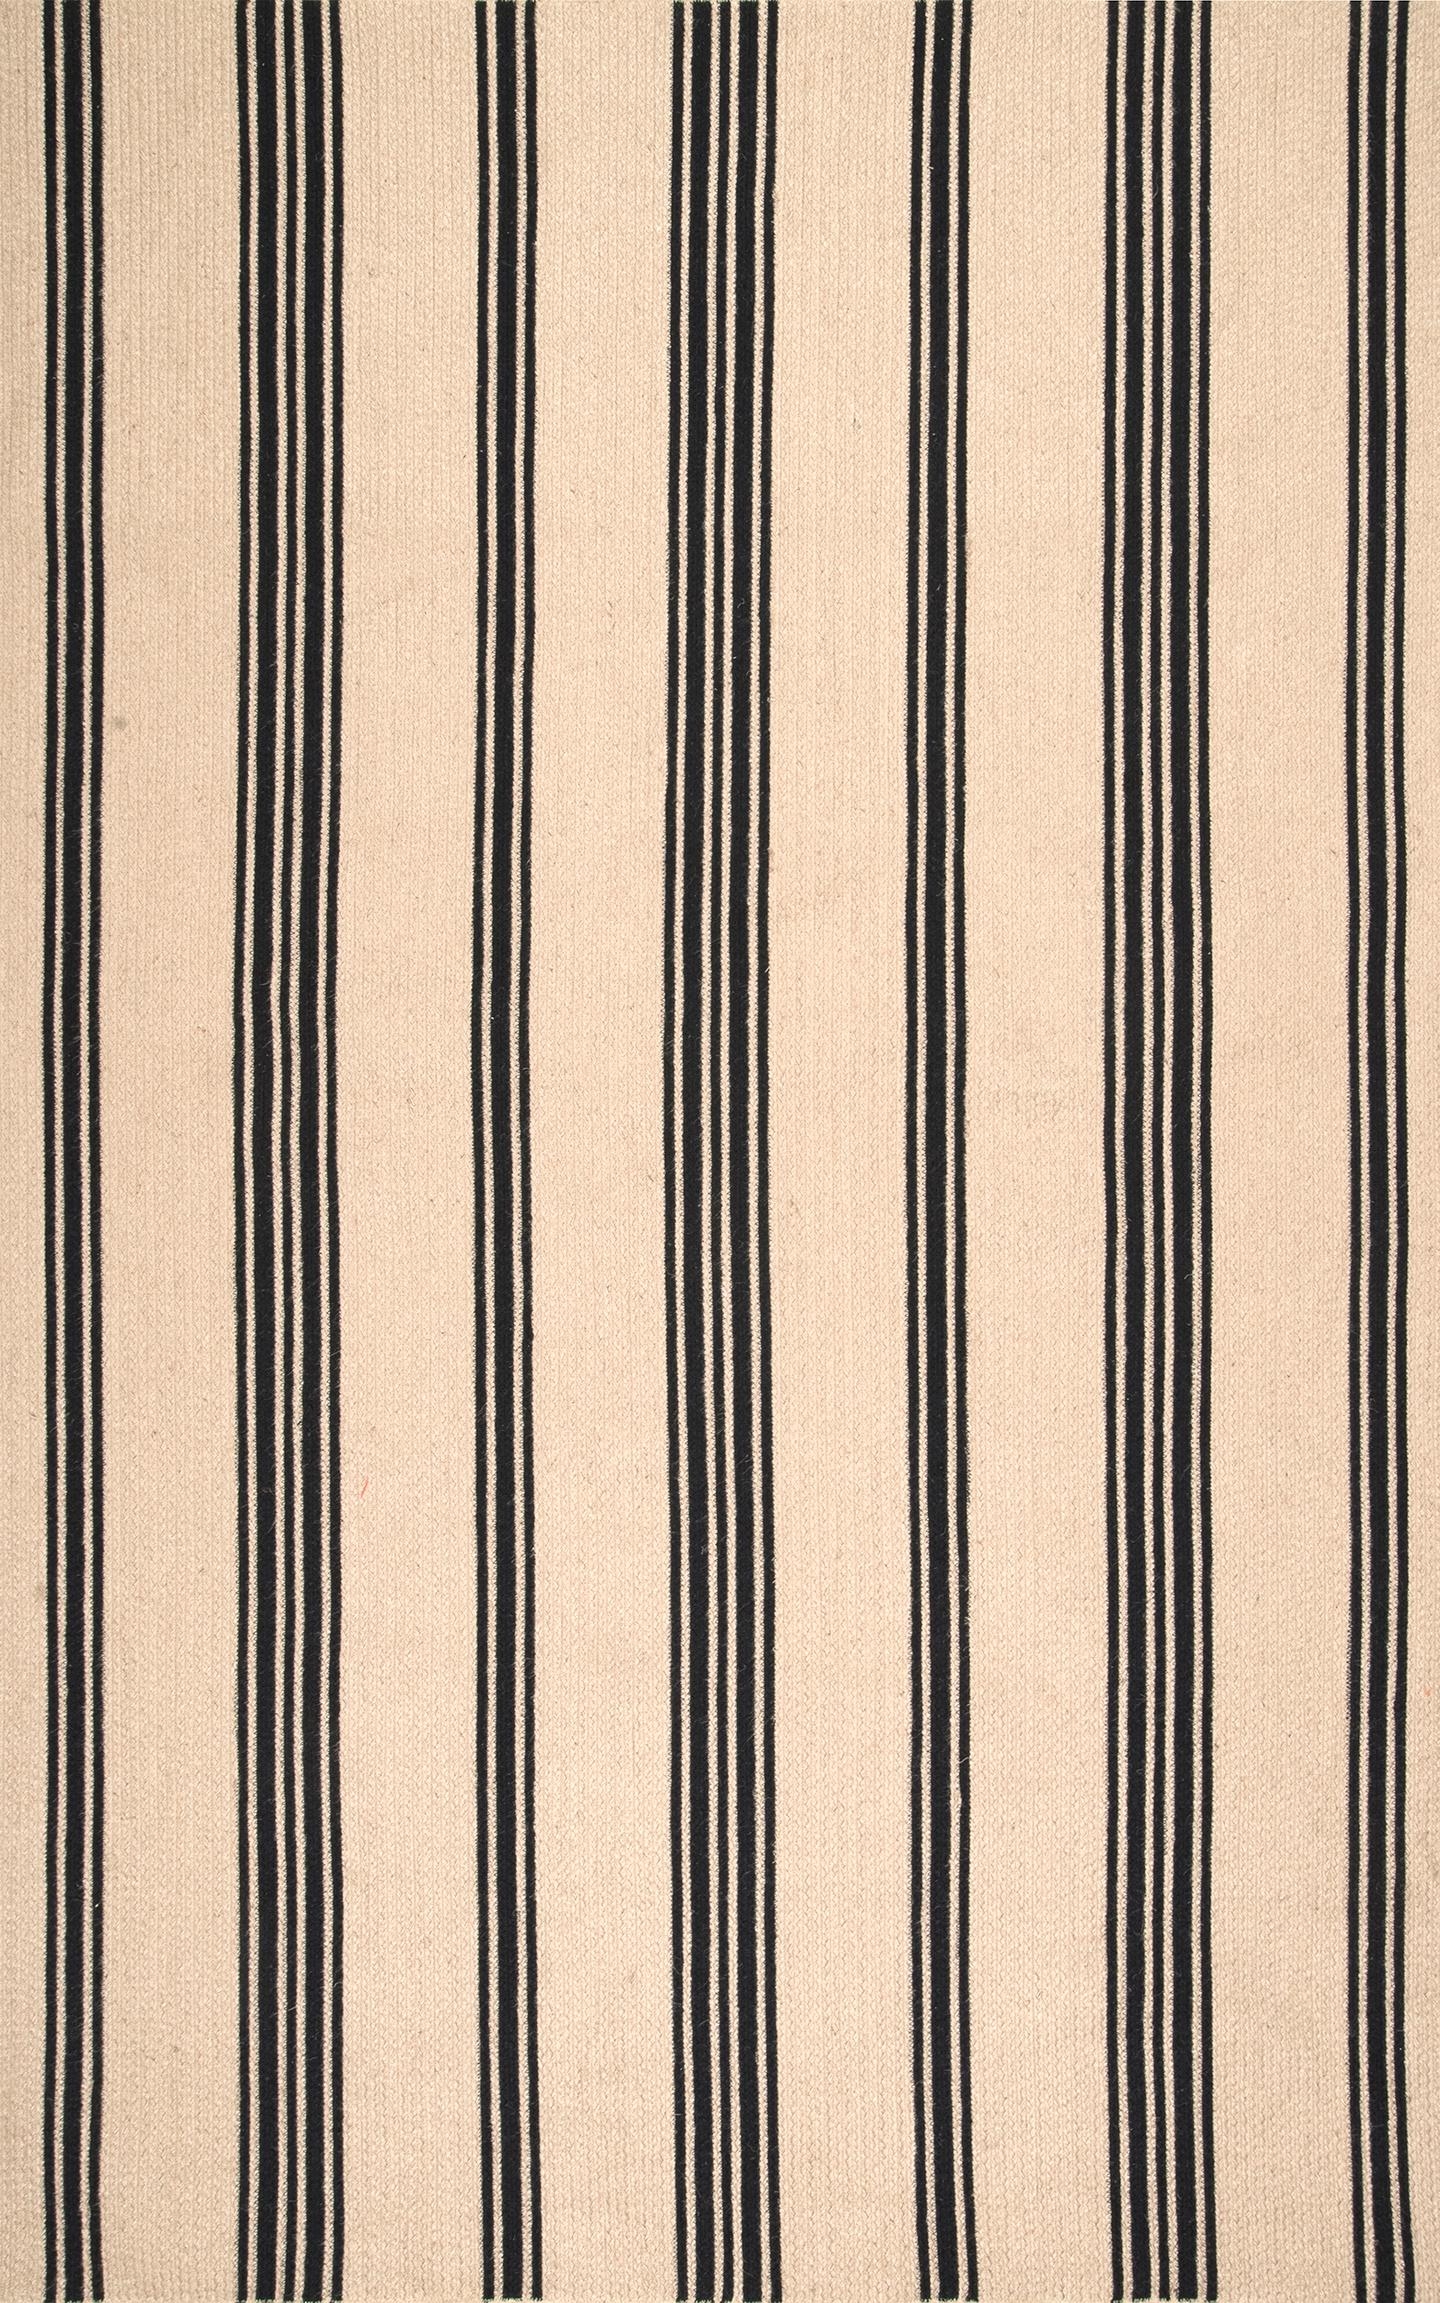 Hand Braided Striped Brenna Area Rug - Image 1